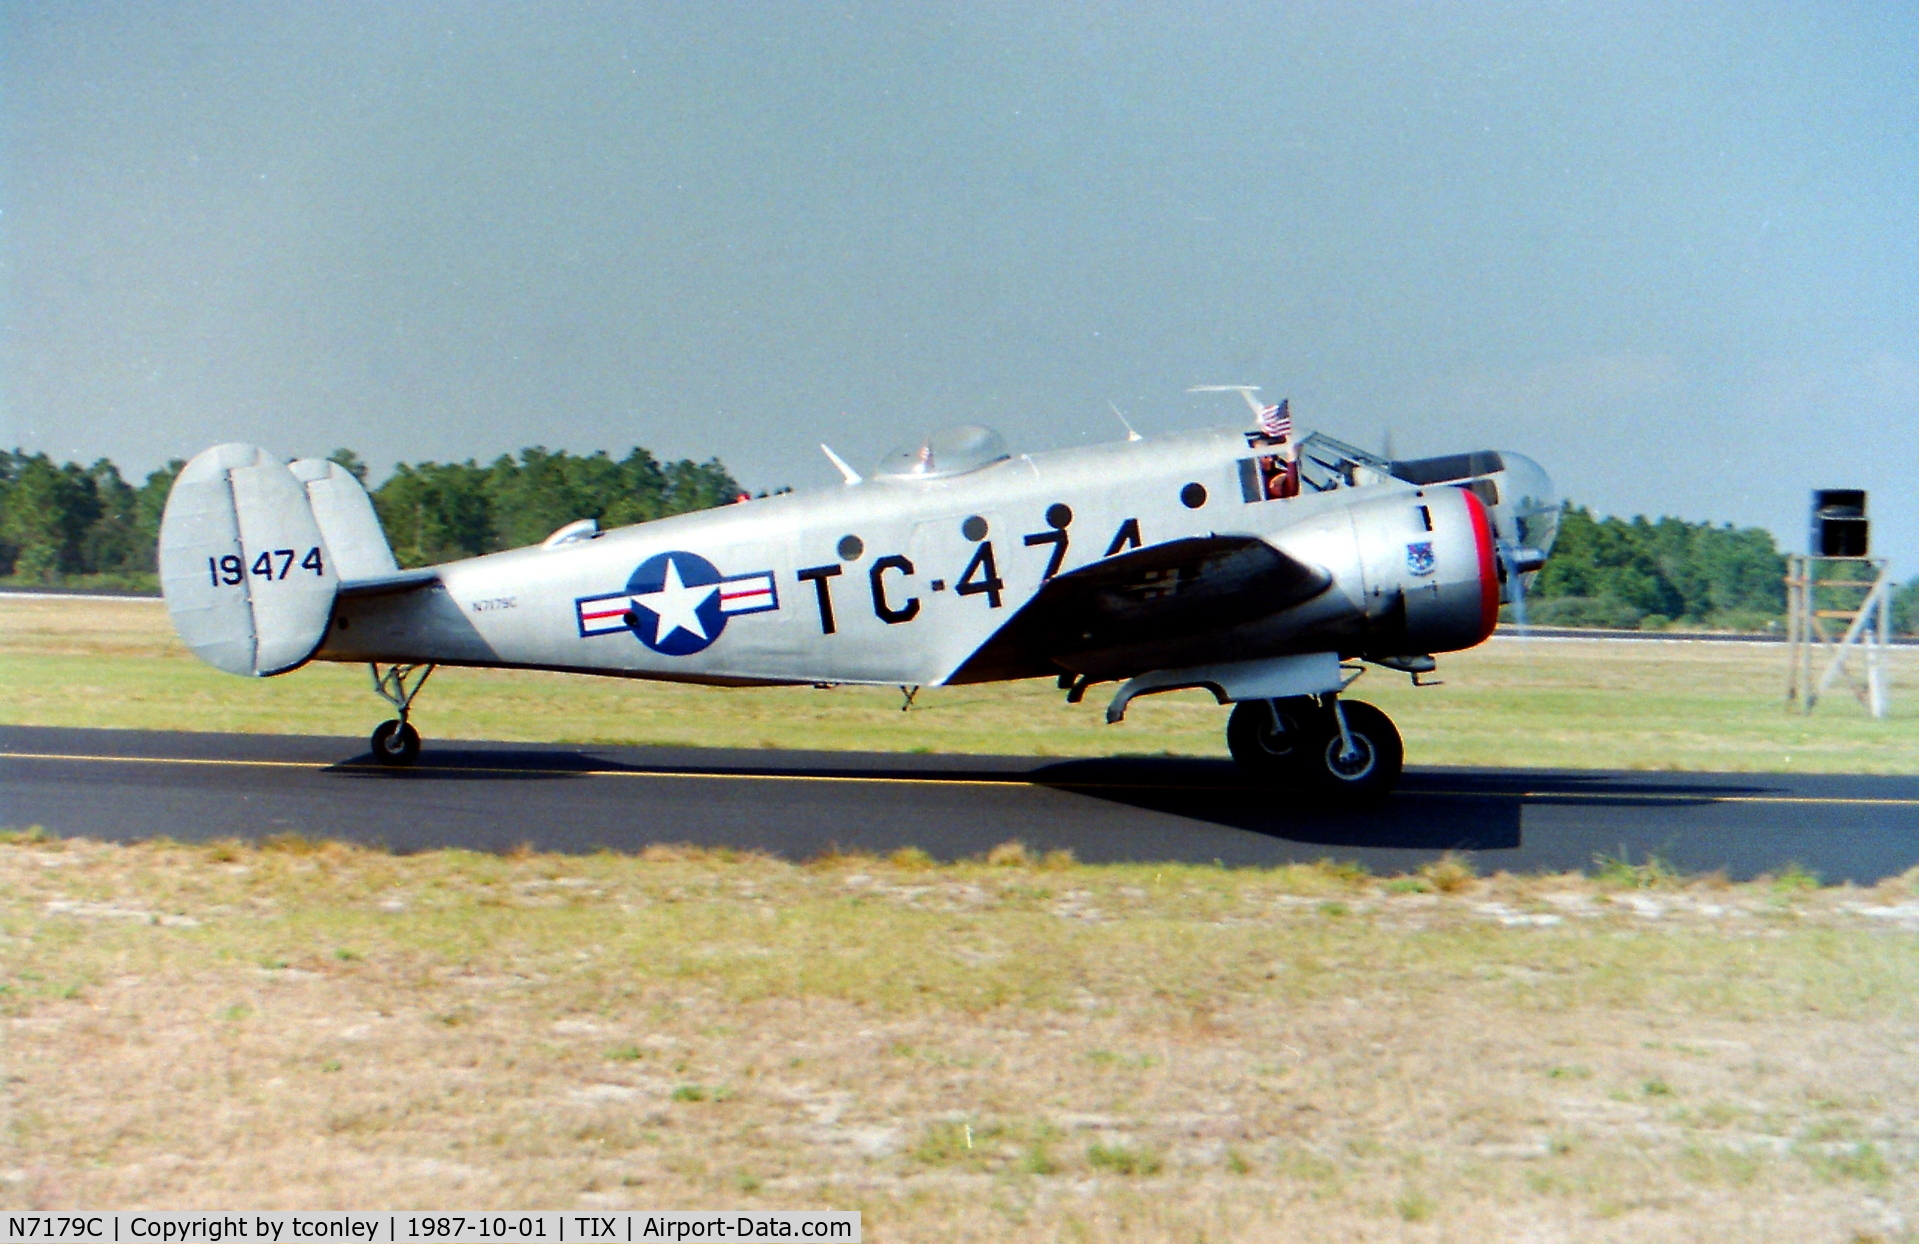 N7179C, 1943 Beech AT-11 Kansan C/N 3811, Beech AT-11 Kansan (Model 18) N7179C SN 3811 Yr Mfg 1943 @ Valiant Air Command Titusville, FL 1987